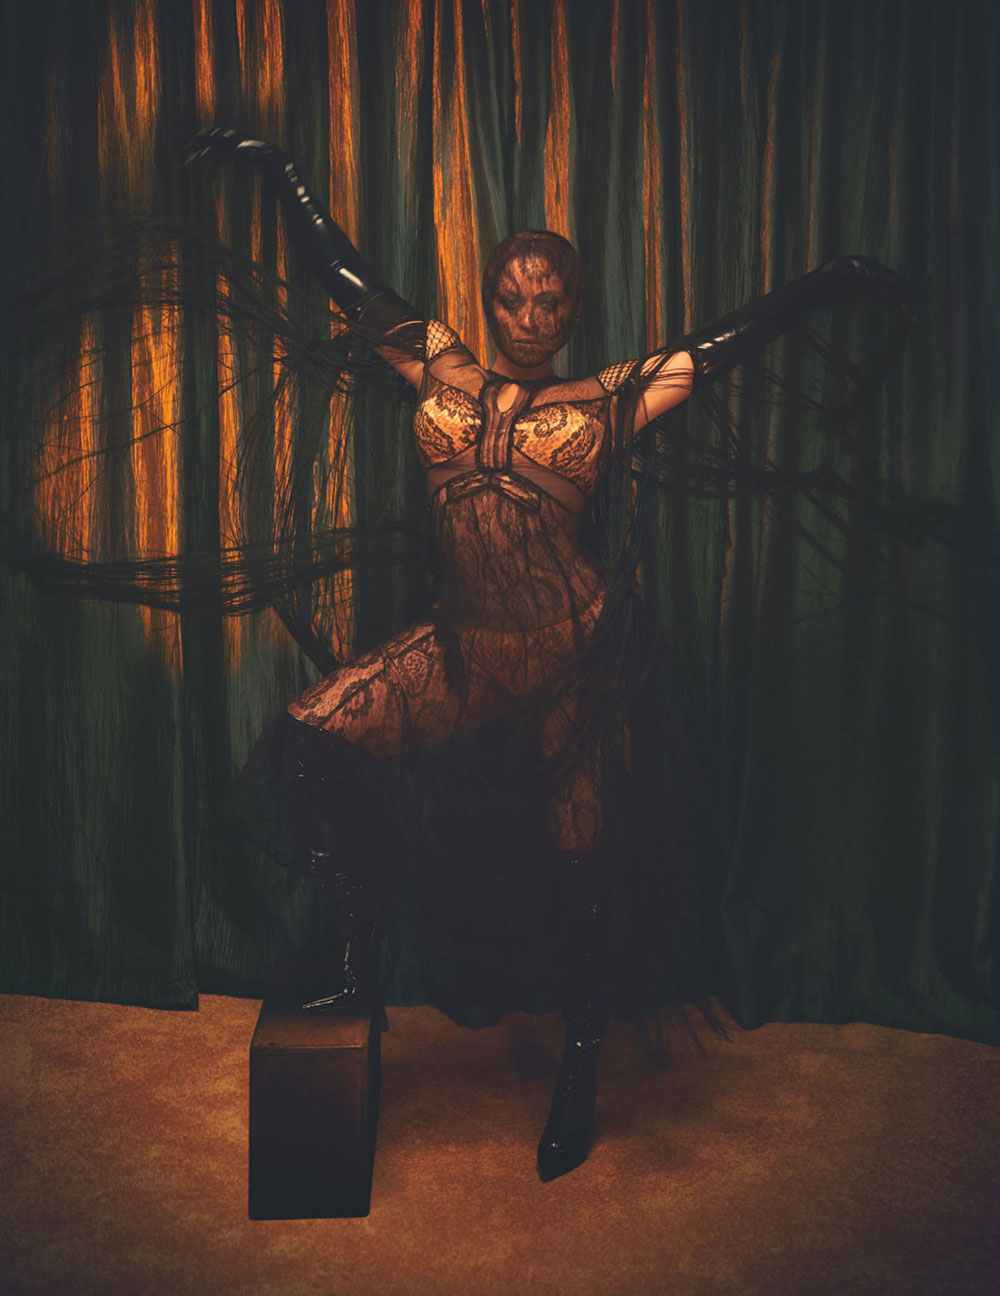 Beyoncé covers British Vogue December 2020 by Kennedi Carter